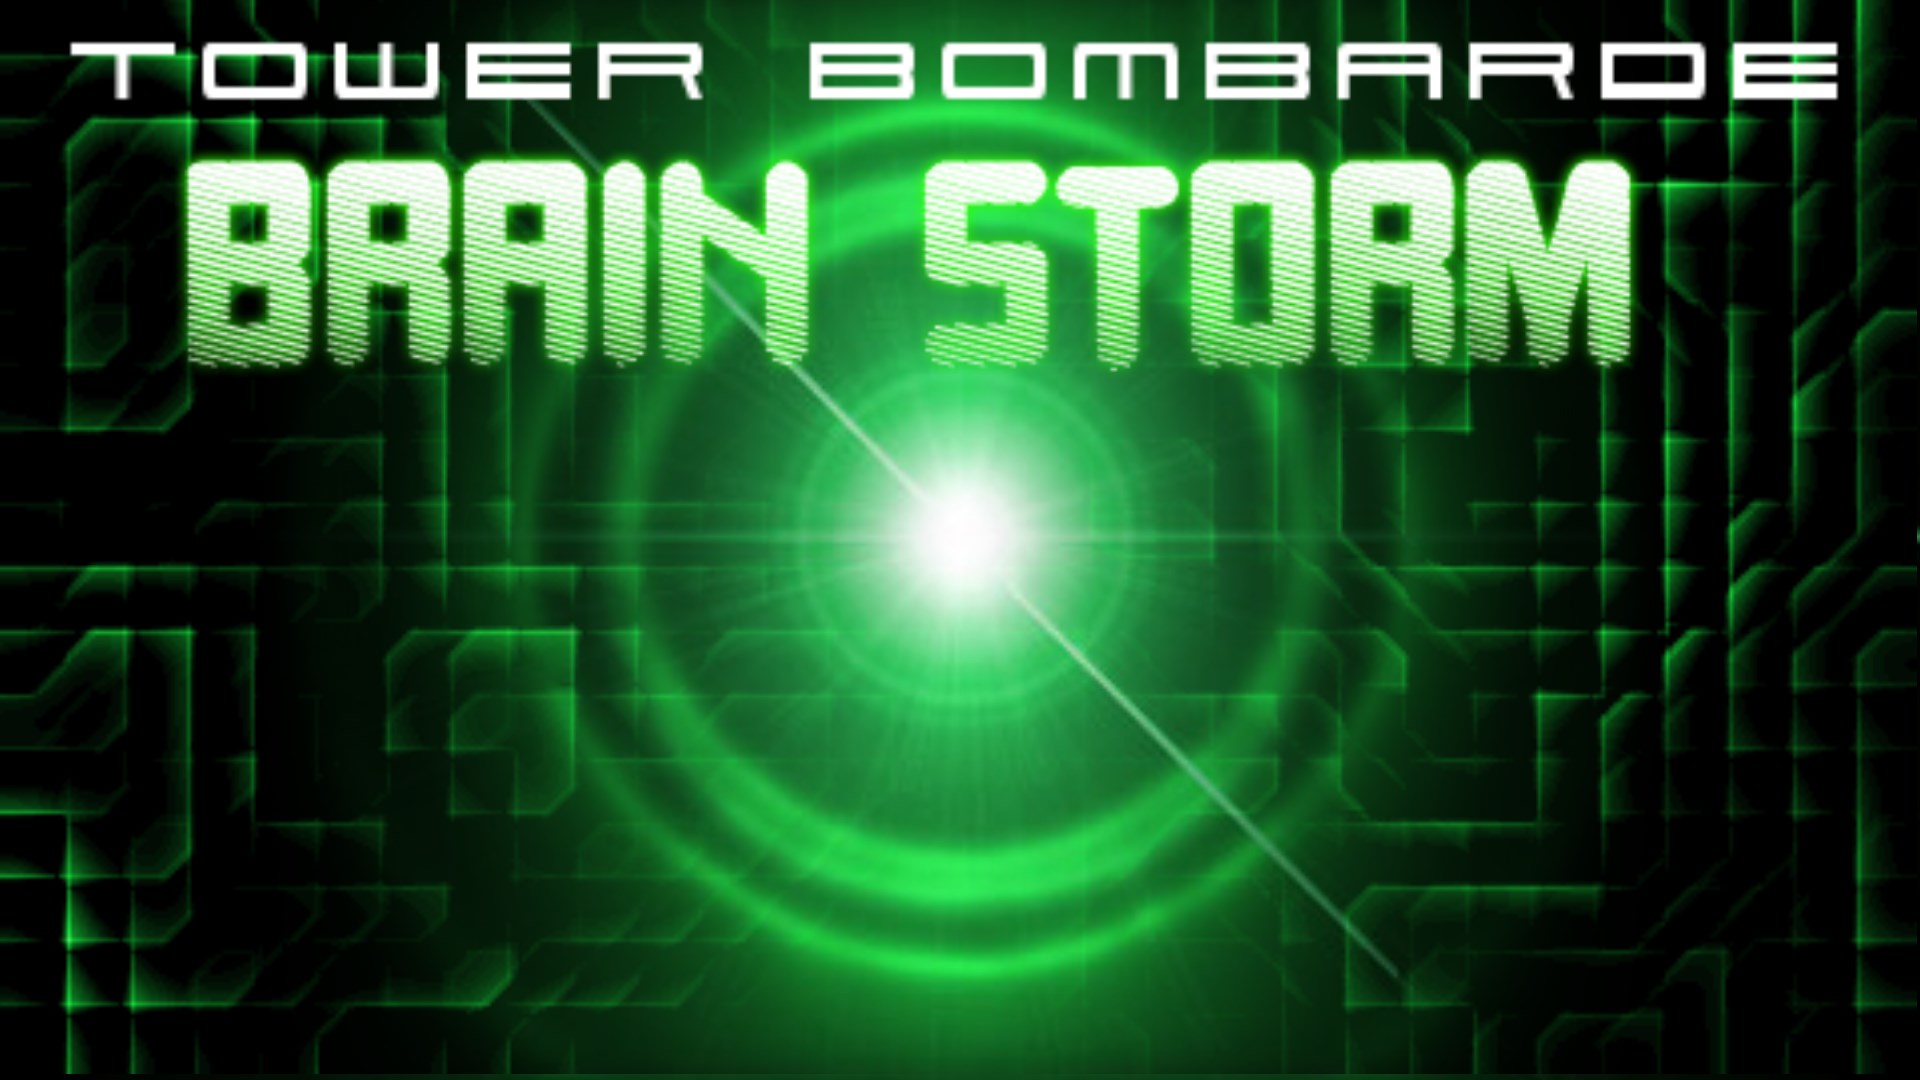 Brain start. Брэйн шторм 79 уровень. Storm Tower похожая игра. Игра 2007 года на телефон Брейн шторм.